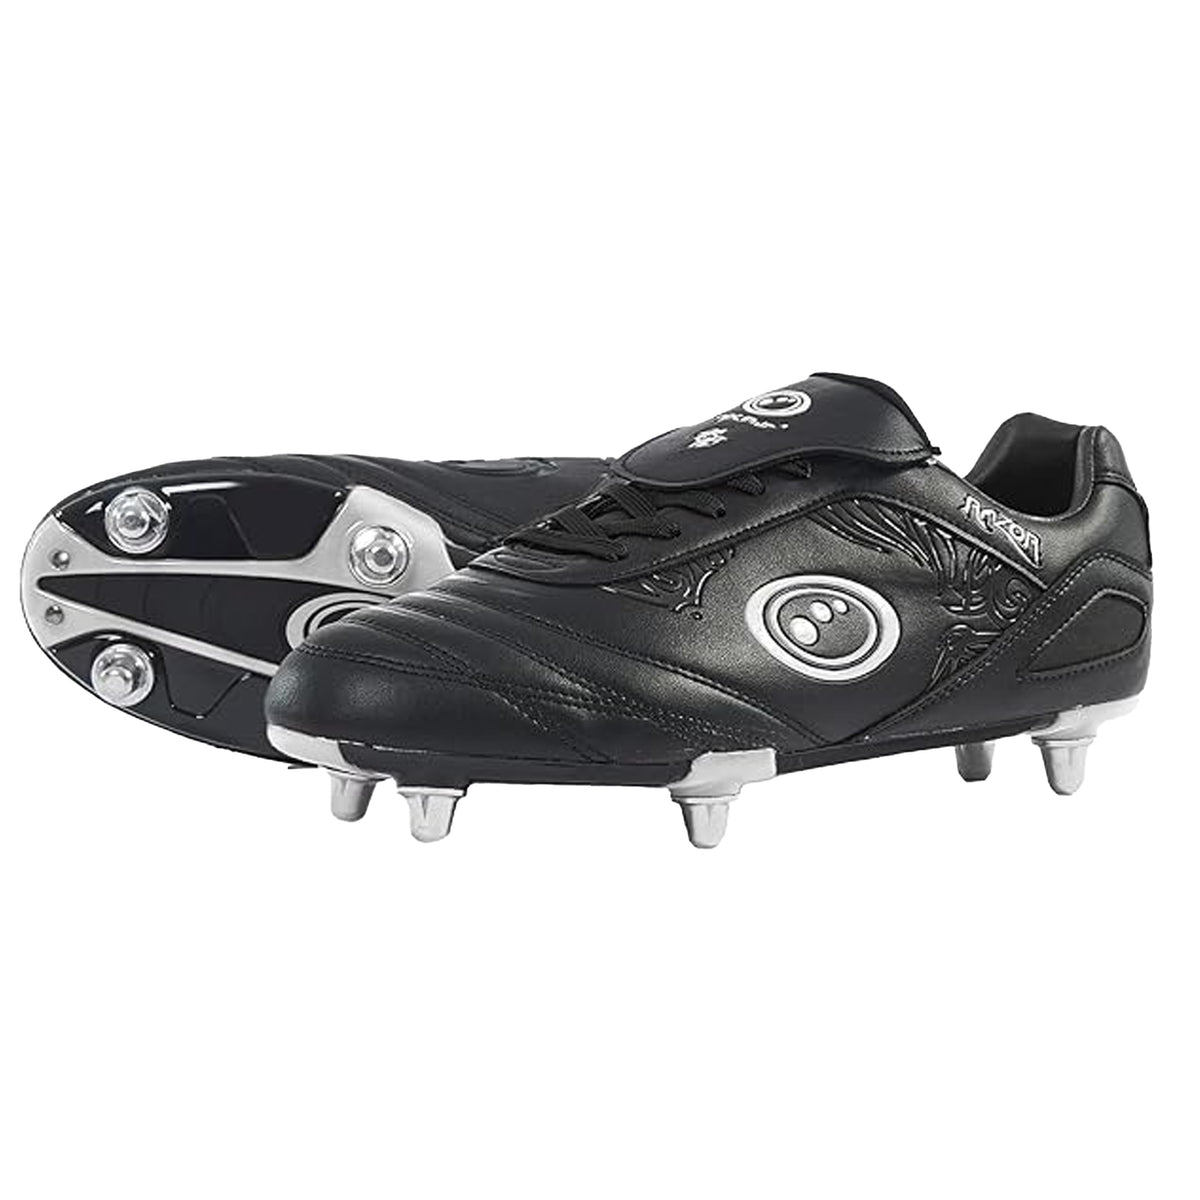 Optimum 6 Stud Razor Football Boots: Black/Silver